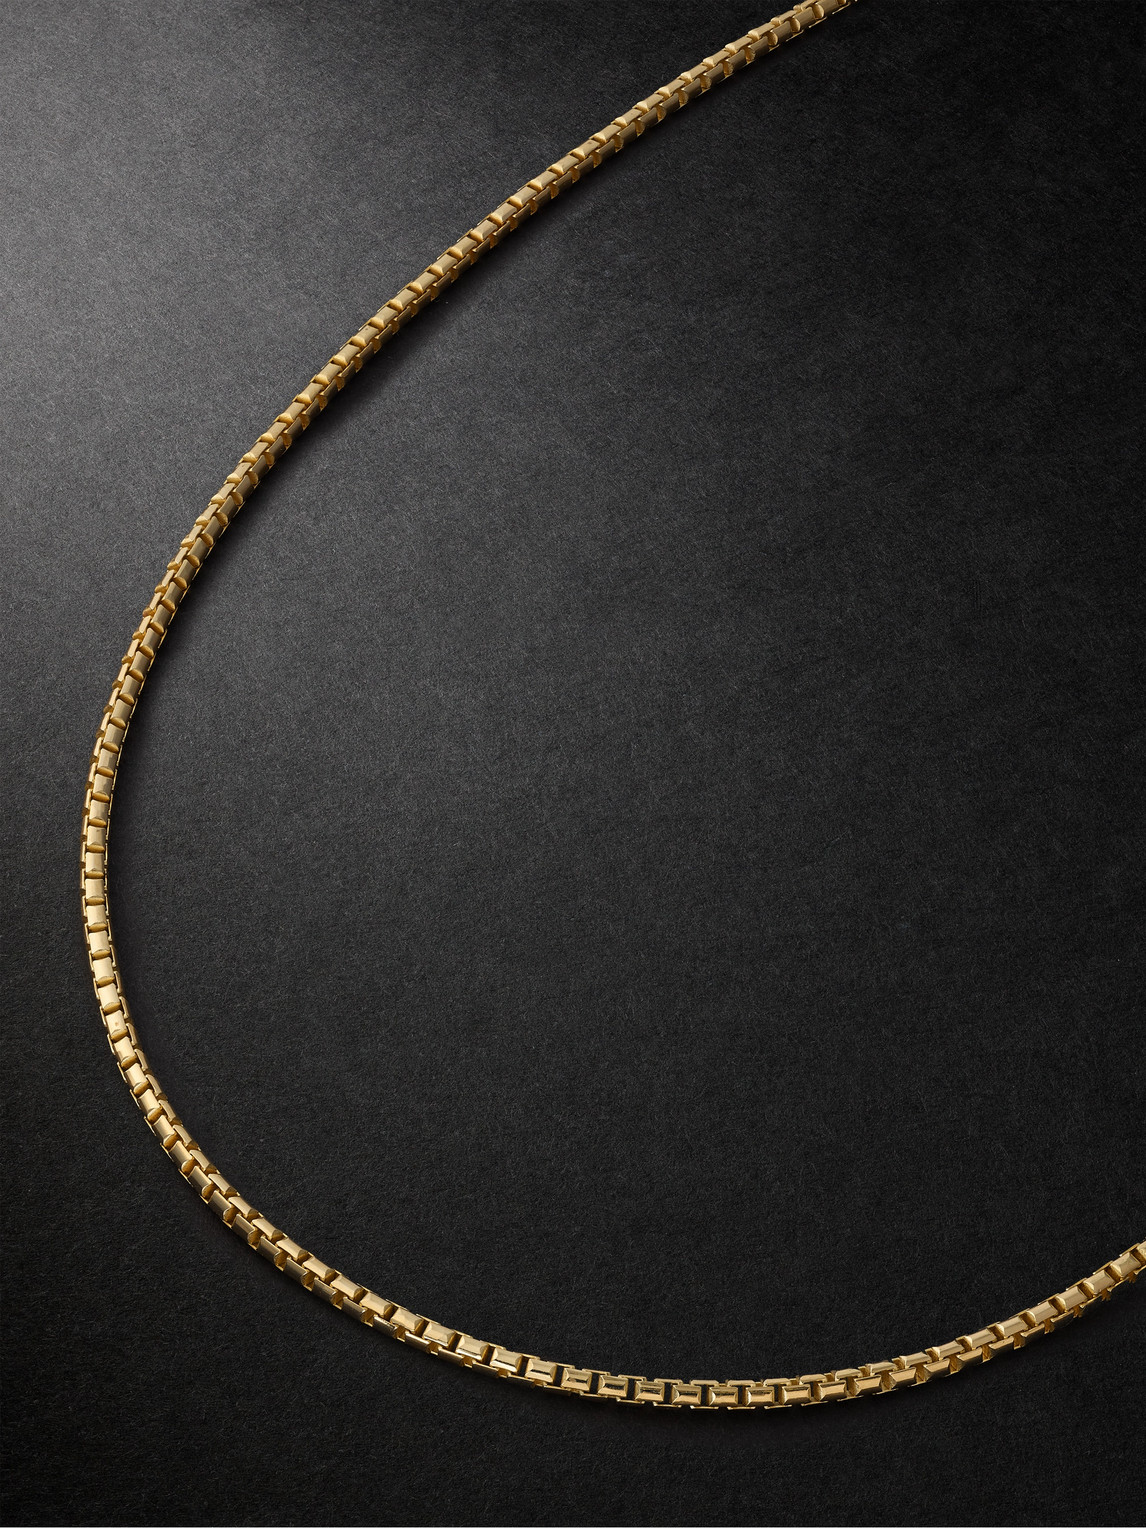 Jacquie Aiche Gold Chain Necklace